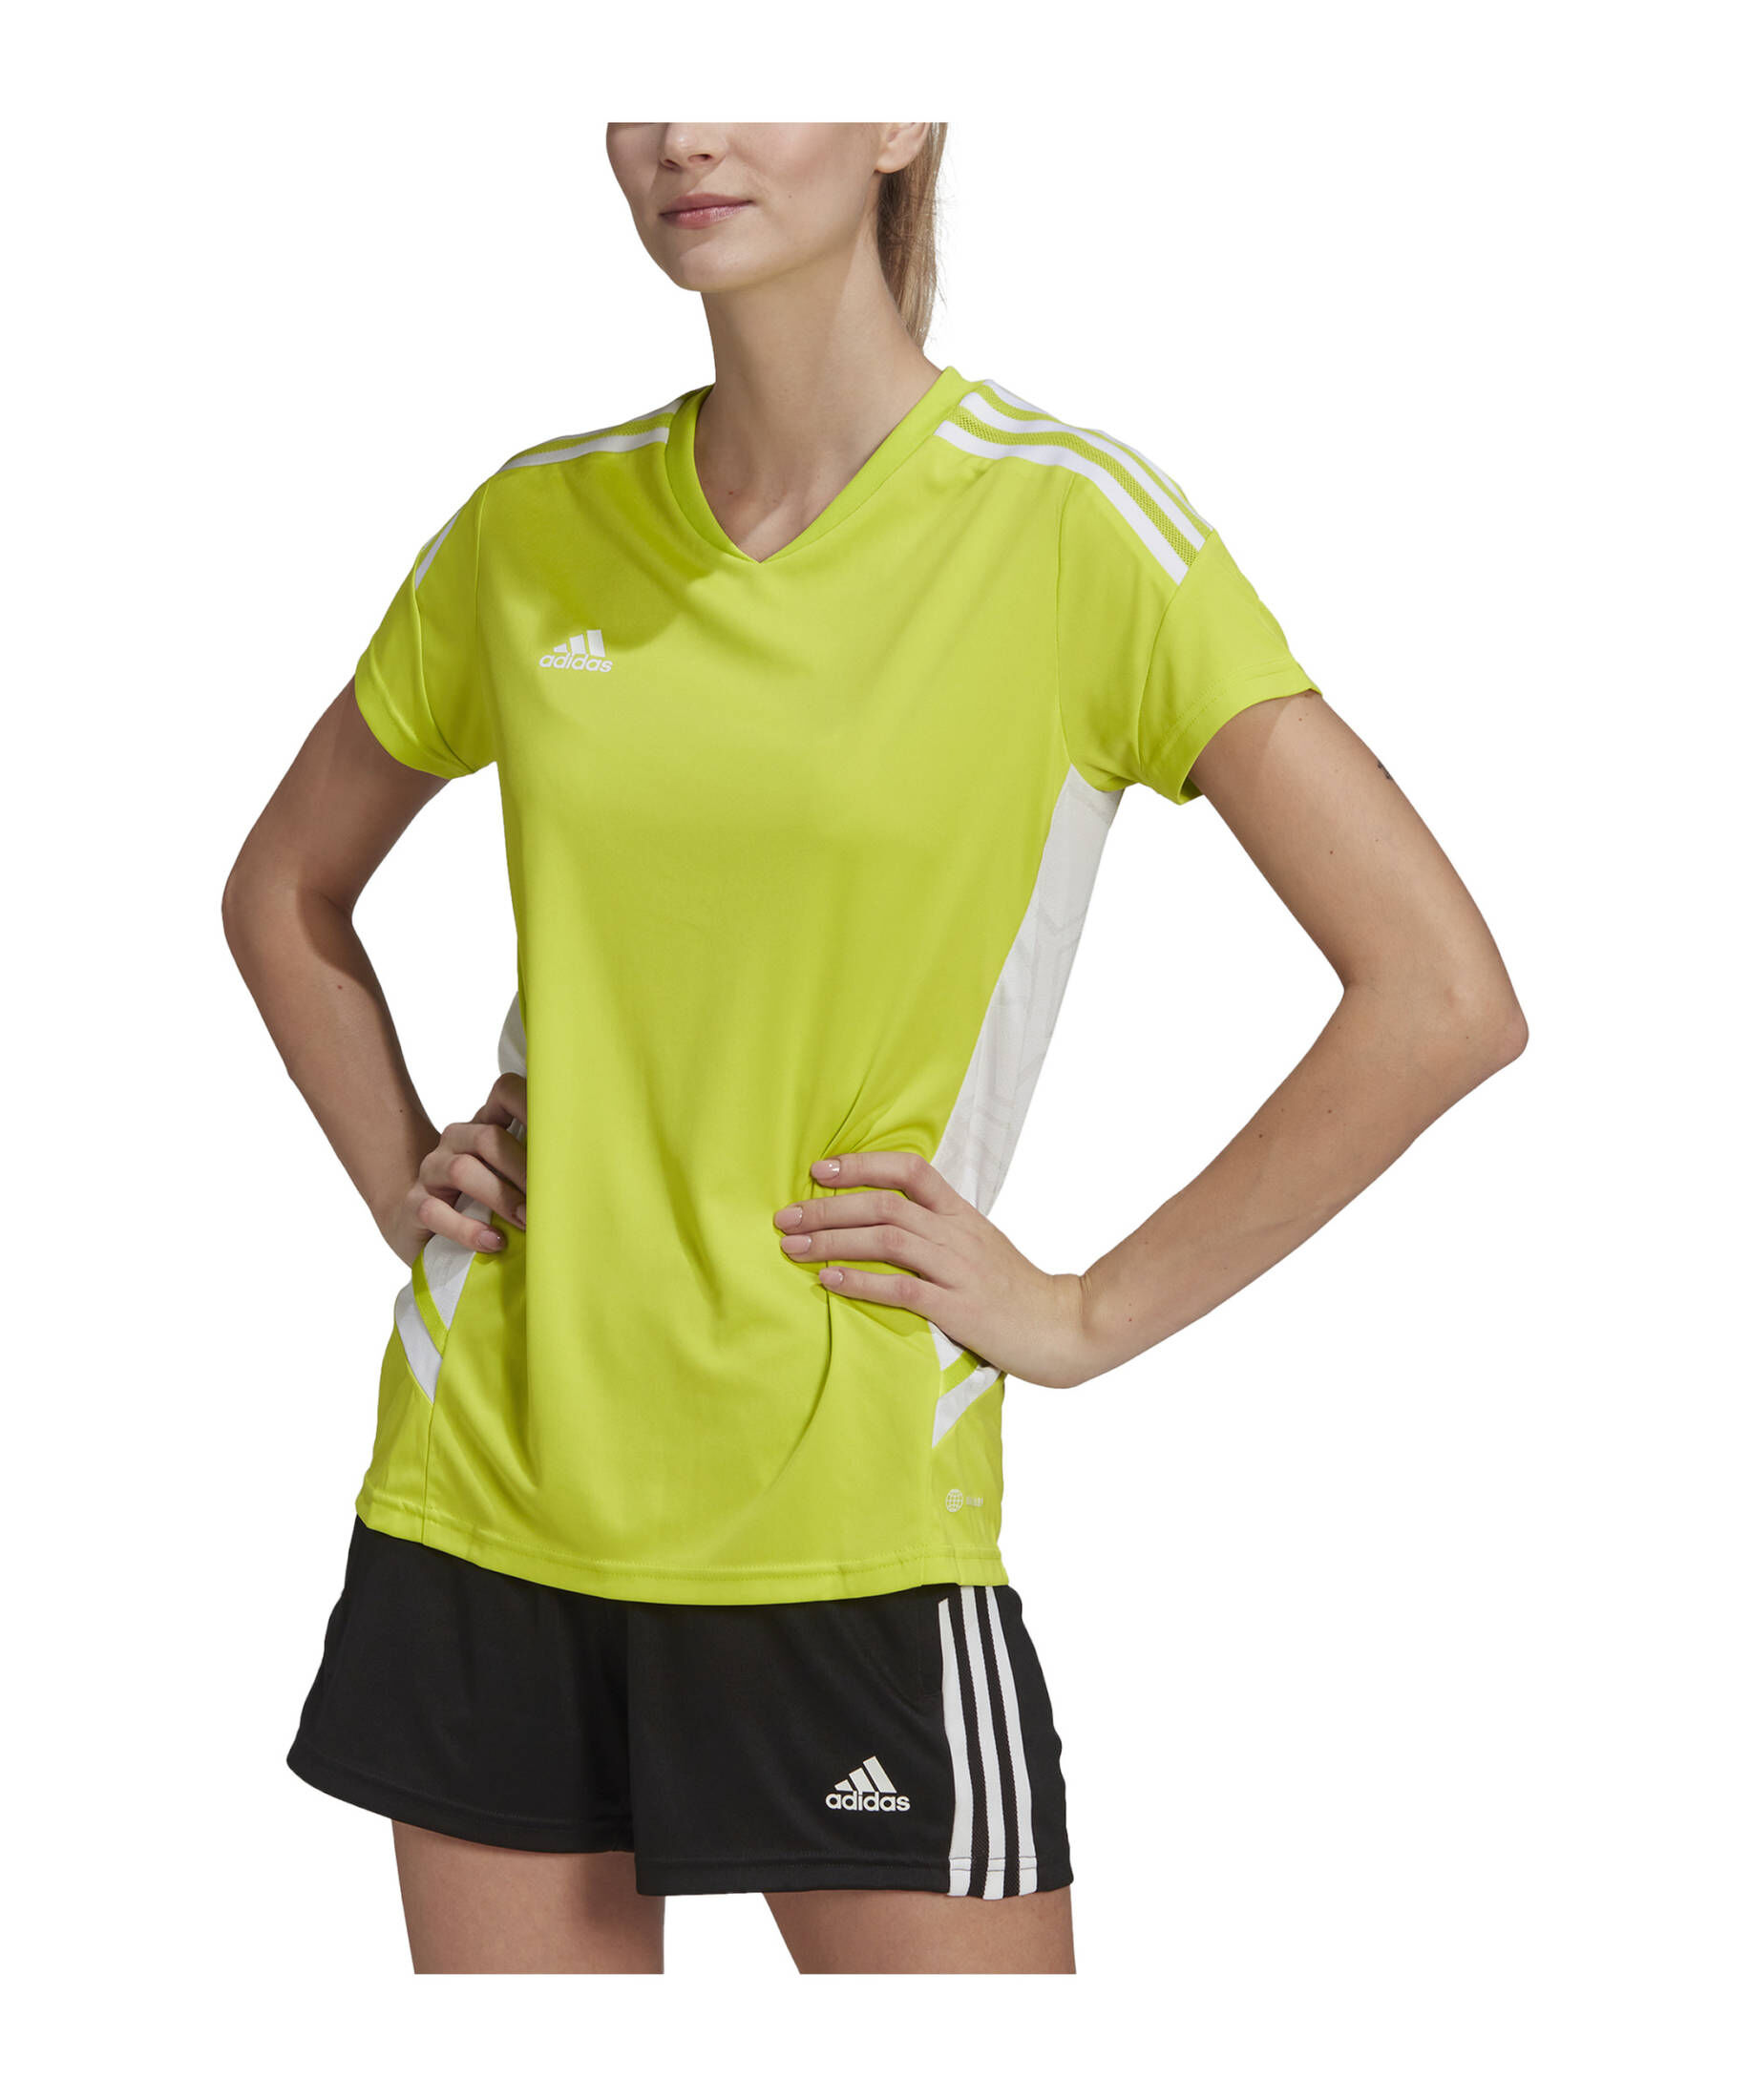 Condivo Performance Fußball Damen Damen engelhorn - Trikot 22 Trikots - adidas Textil kaufen Teamsport |